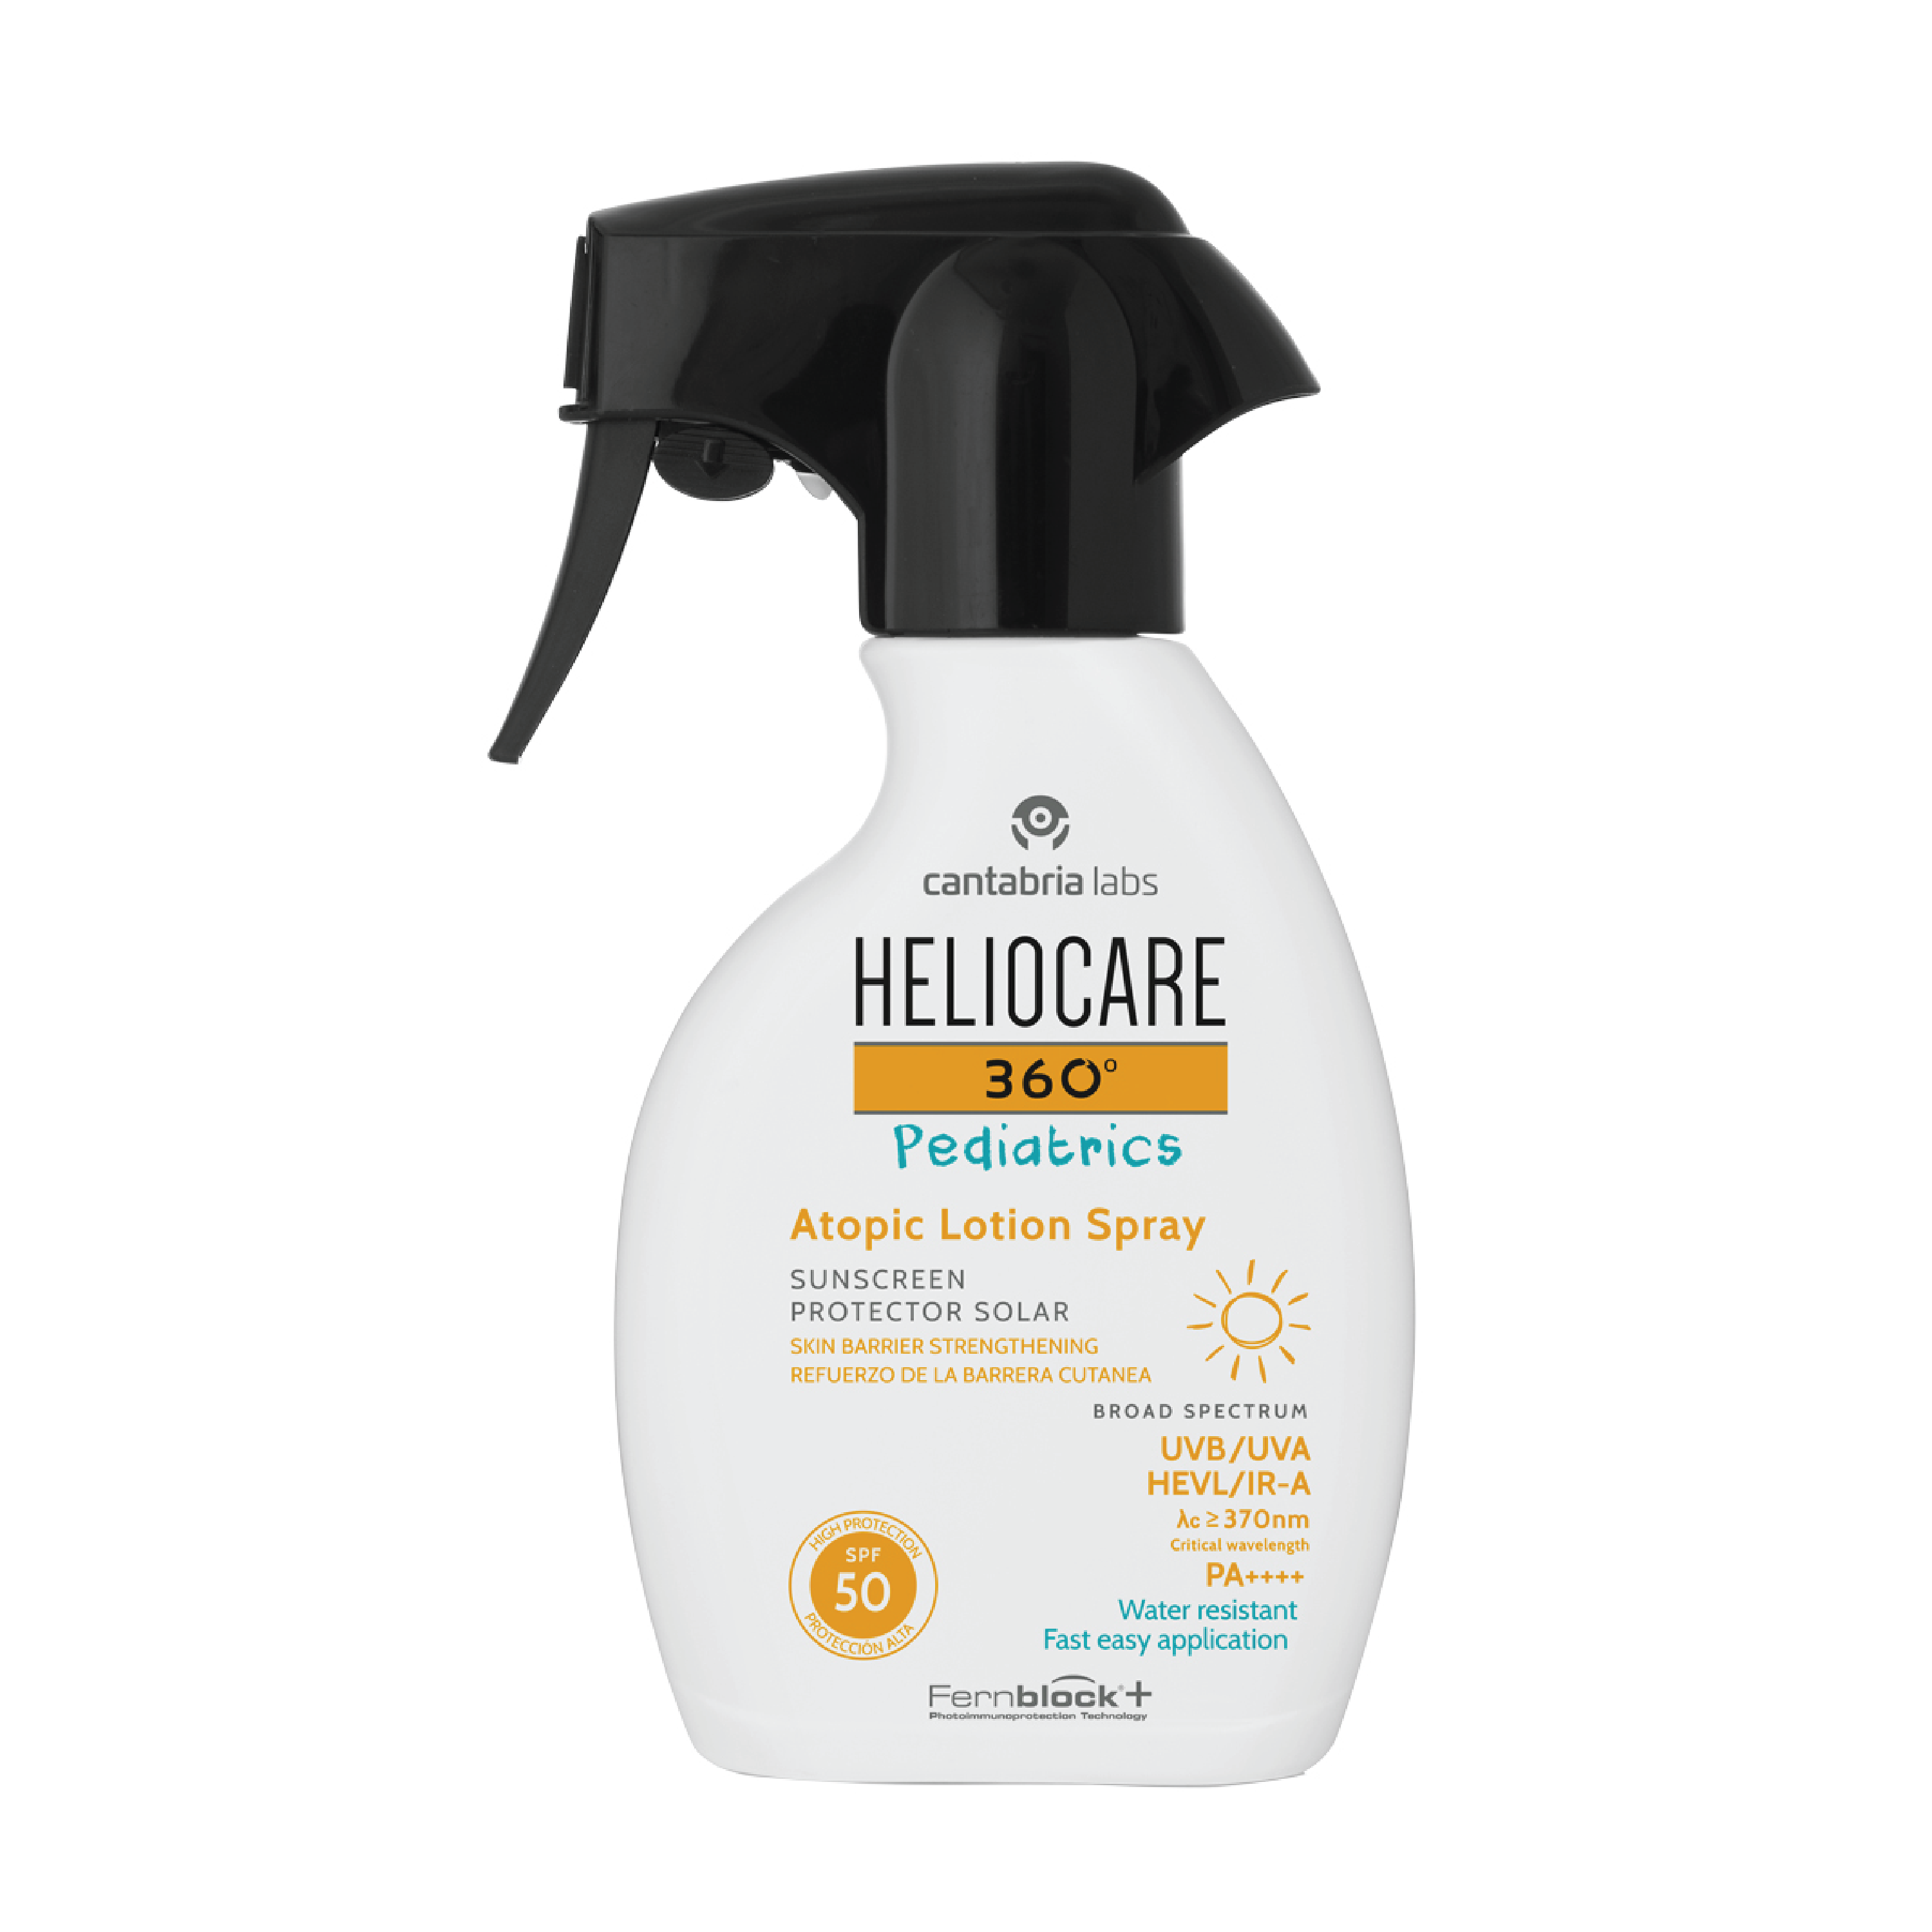 Heliocare 360° Pediatrics Atopic Lotion Spray SPF50, 250 ml